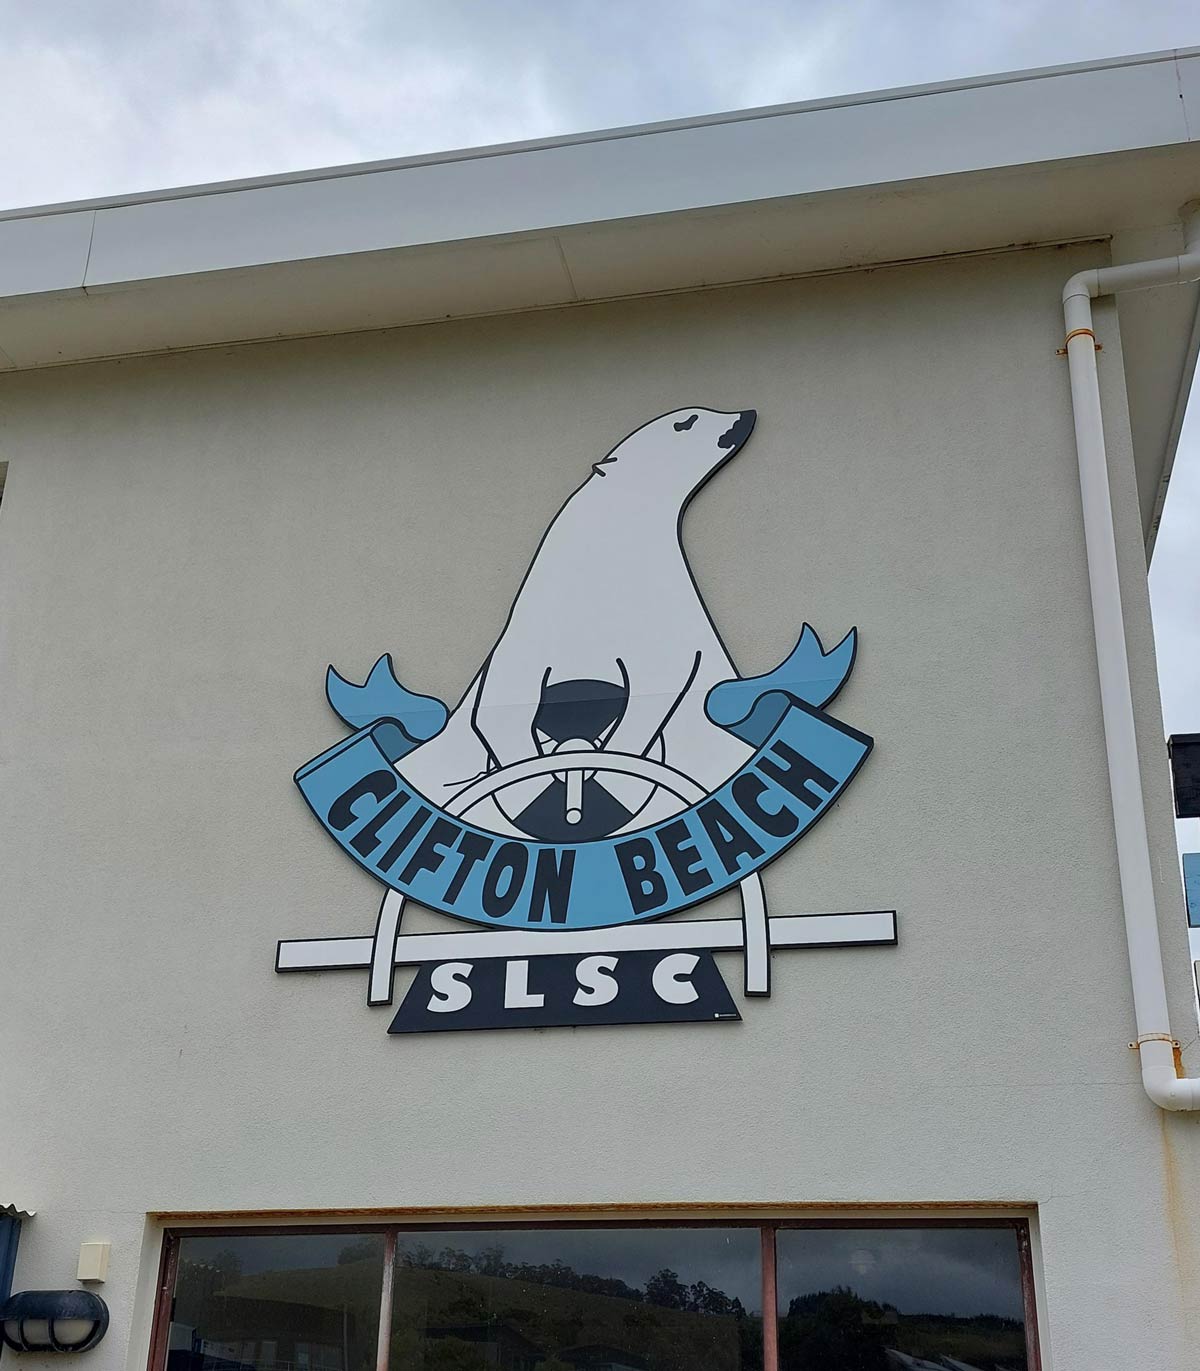 The logo of my local surf life saving club